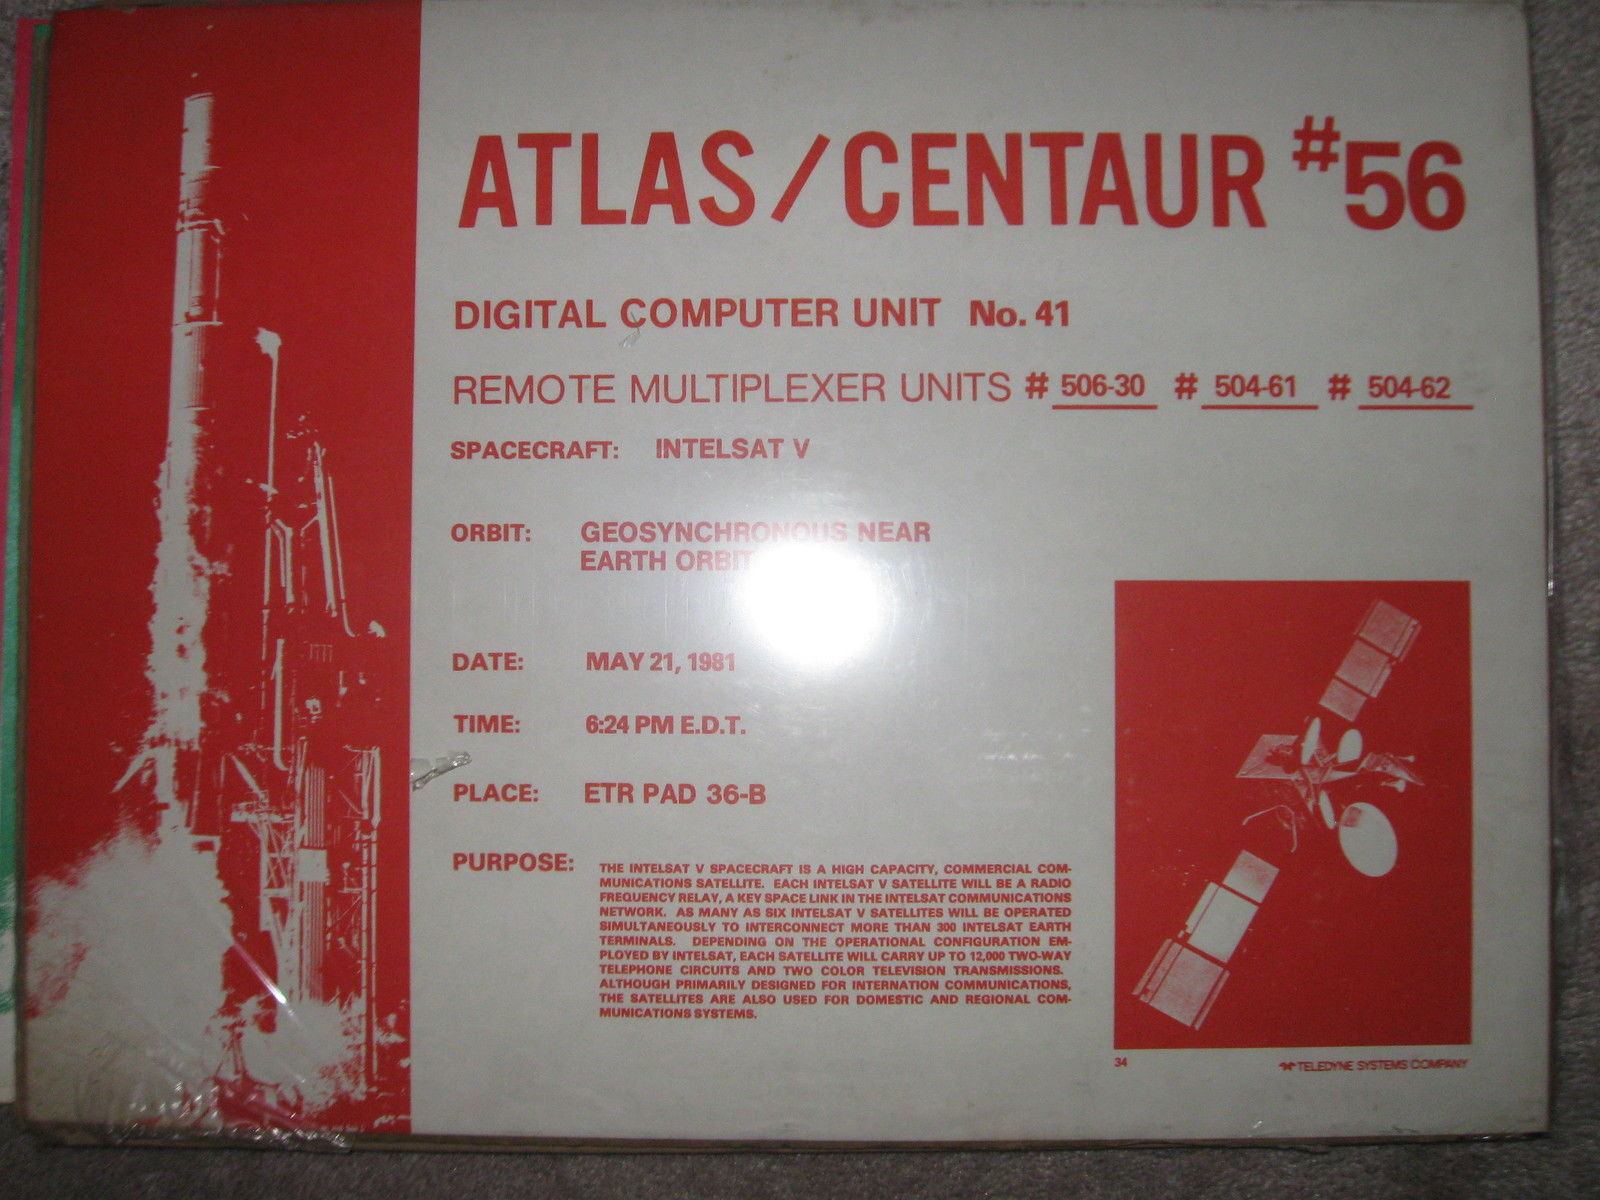 Atlas / Centaur #56 launch poster